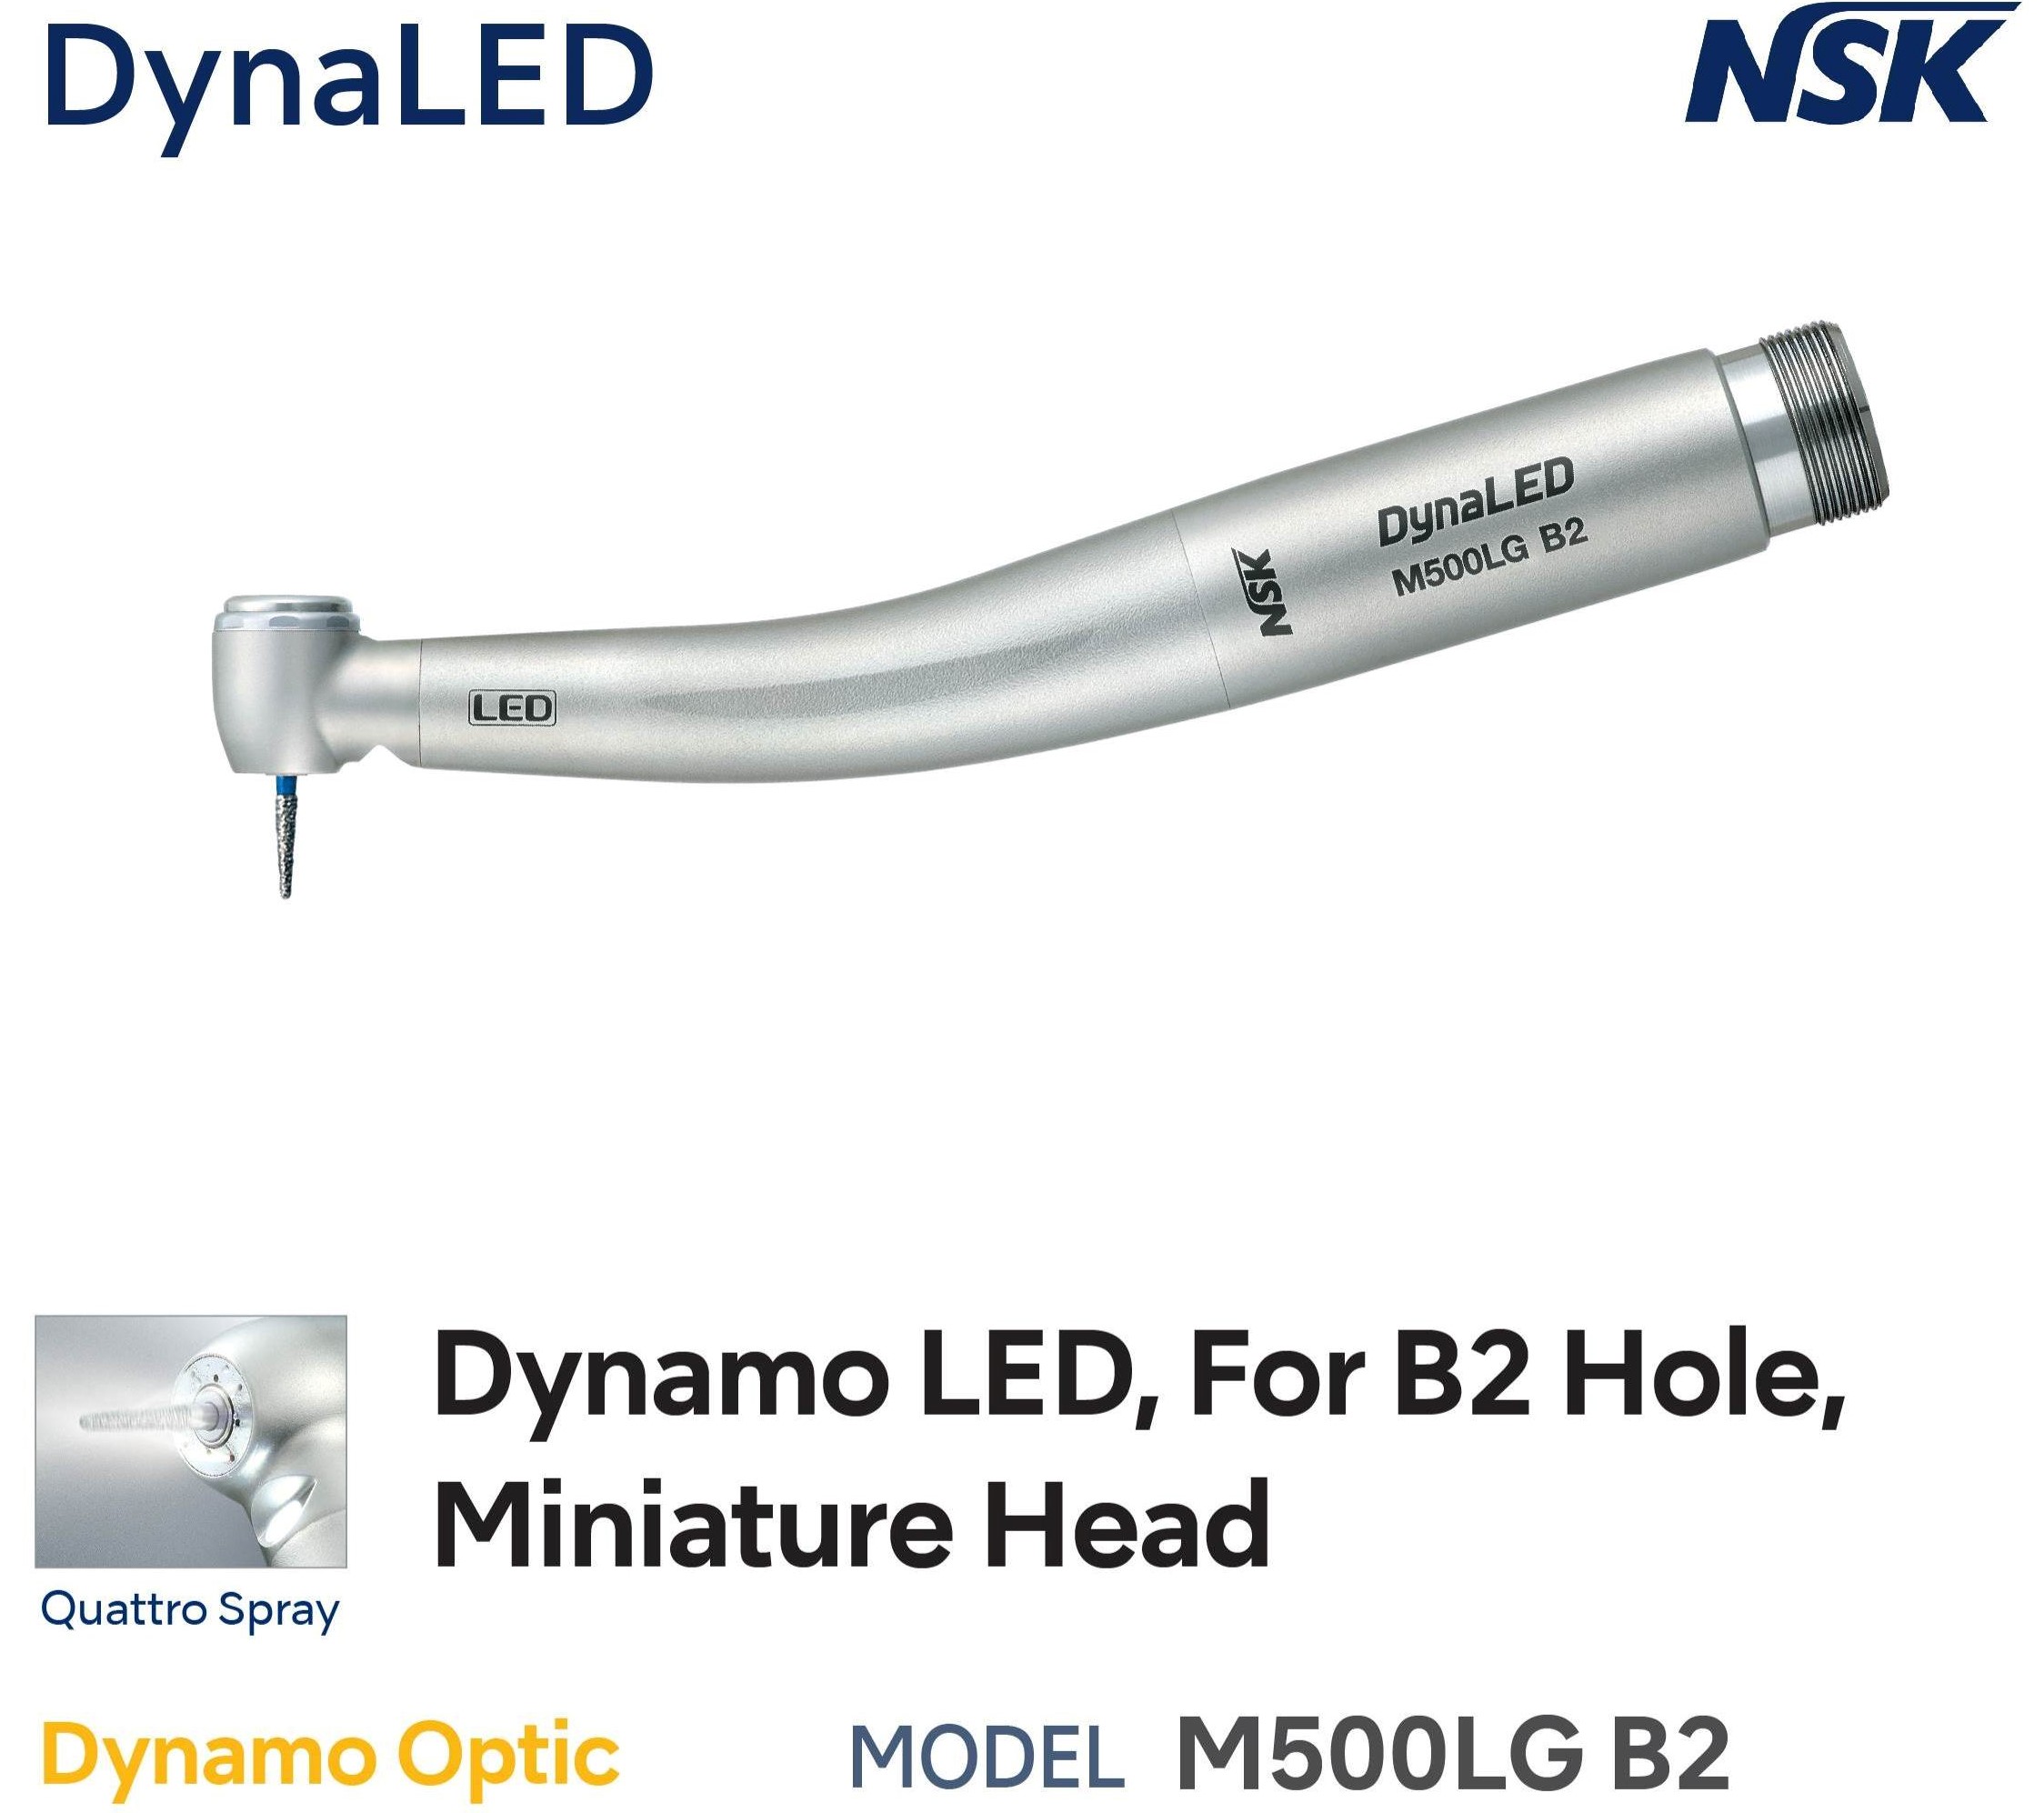 NSK DYNA Led Optic Airotor Handpiece